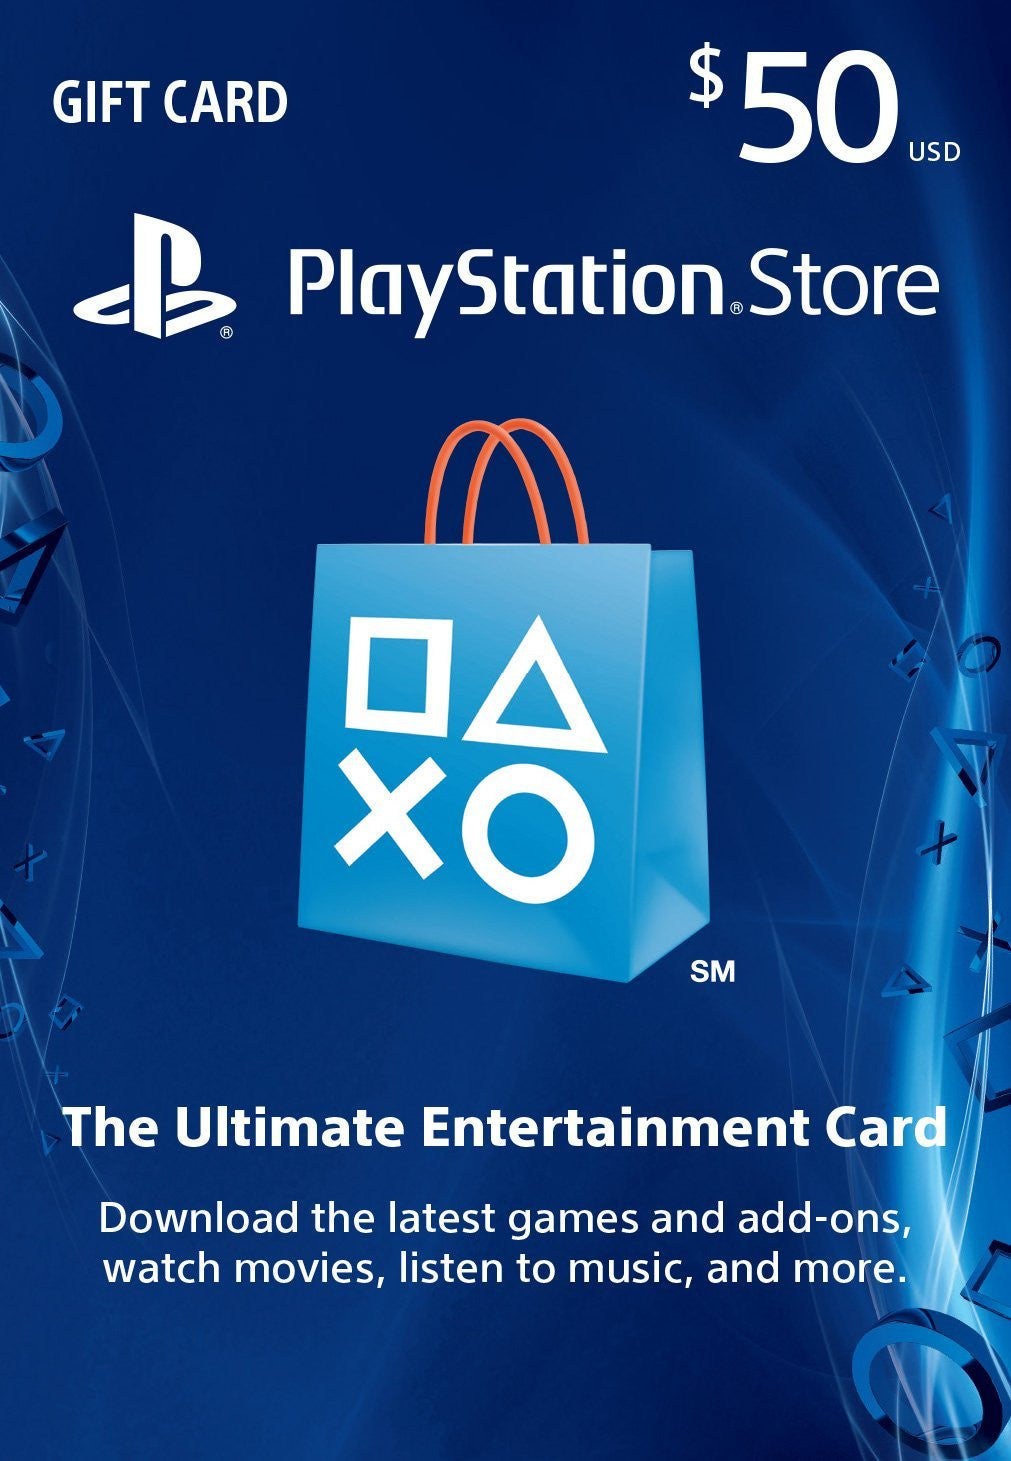 Ratchet & Clank PS4 - Donattelo Games - Gift Card PSN, Jogo de PS3, PS4 e  PS5